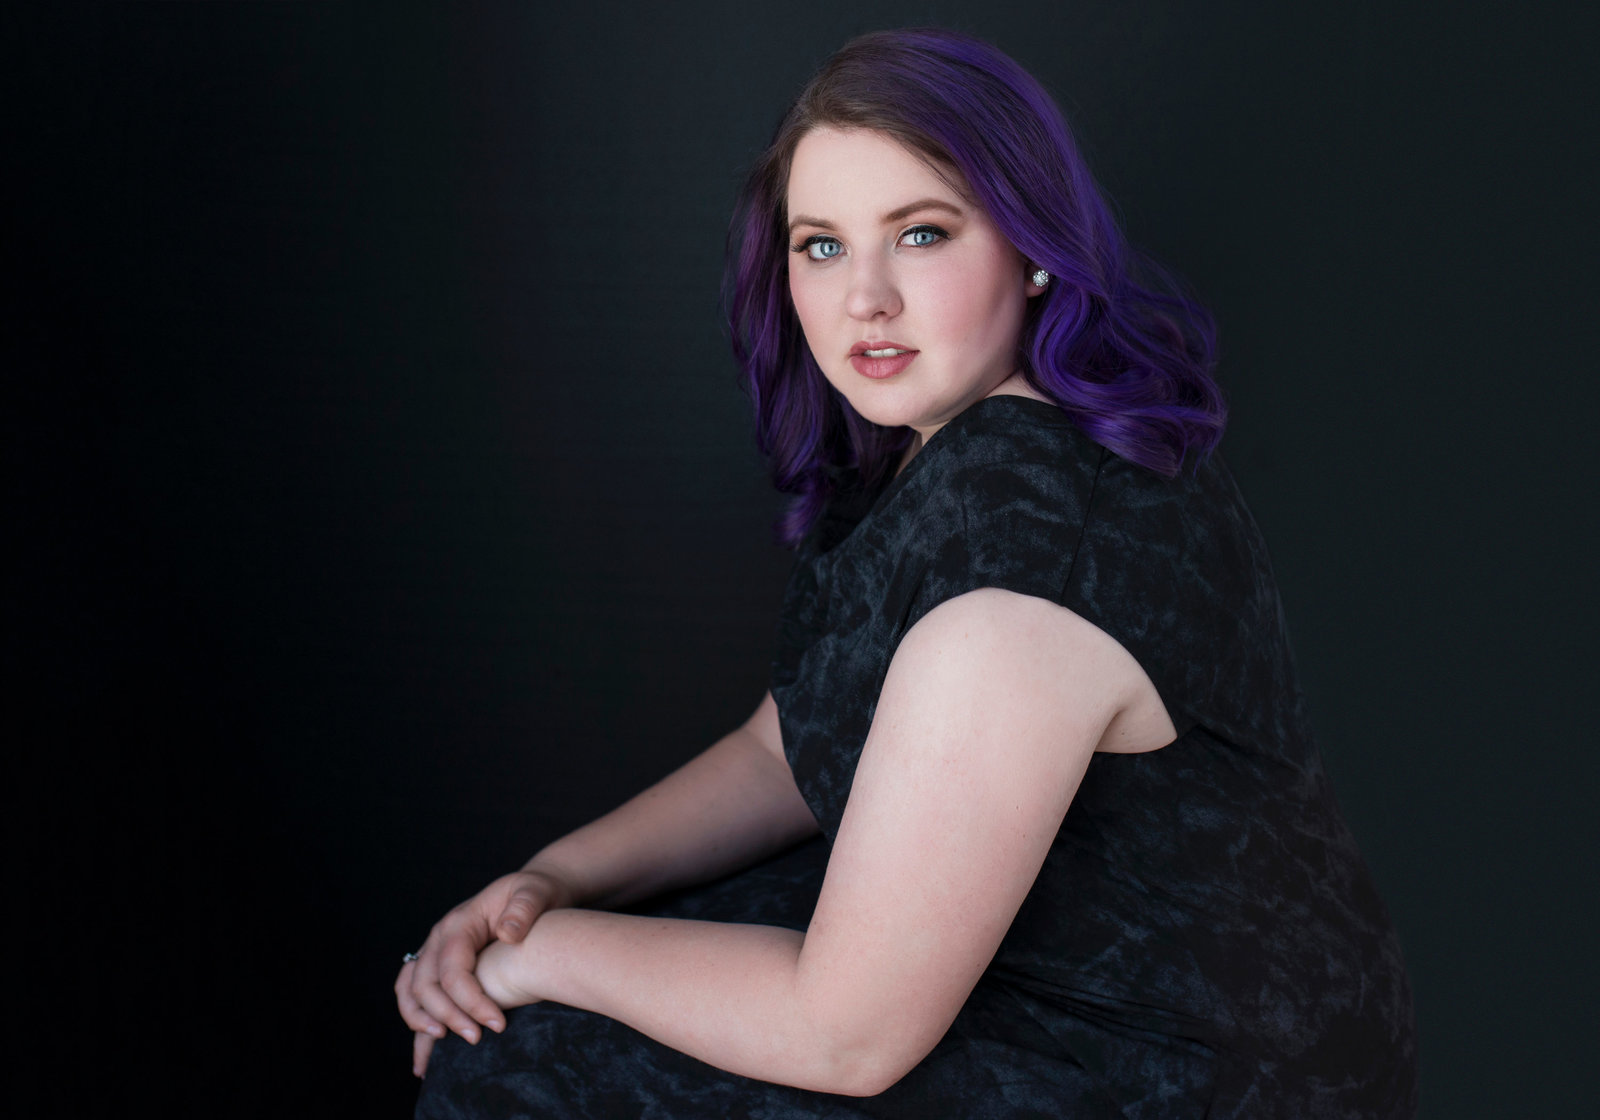 Toronto - stunning  Portrait  og woman  wearing purple  color hair and  black dress